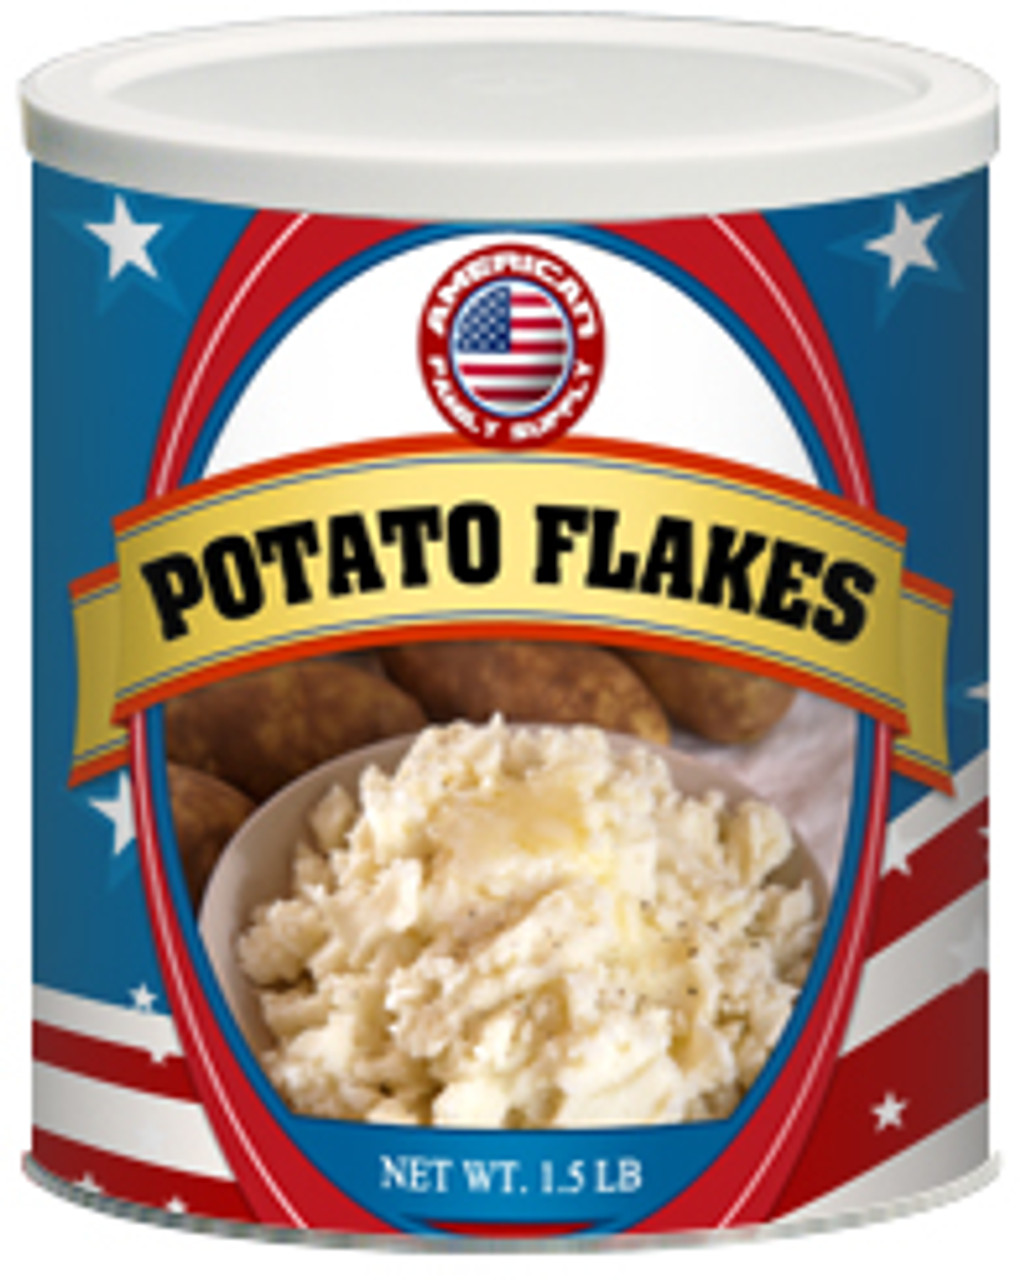 Food Club Potato Flakes Instant Mashed Potatoes